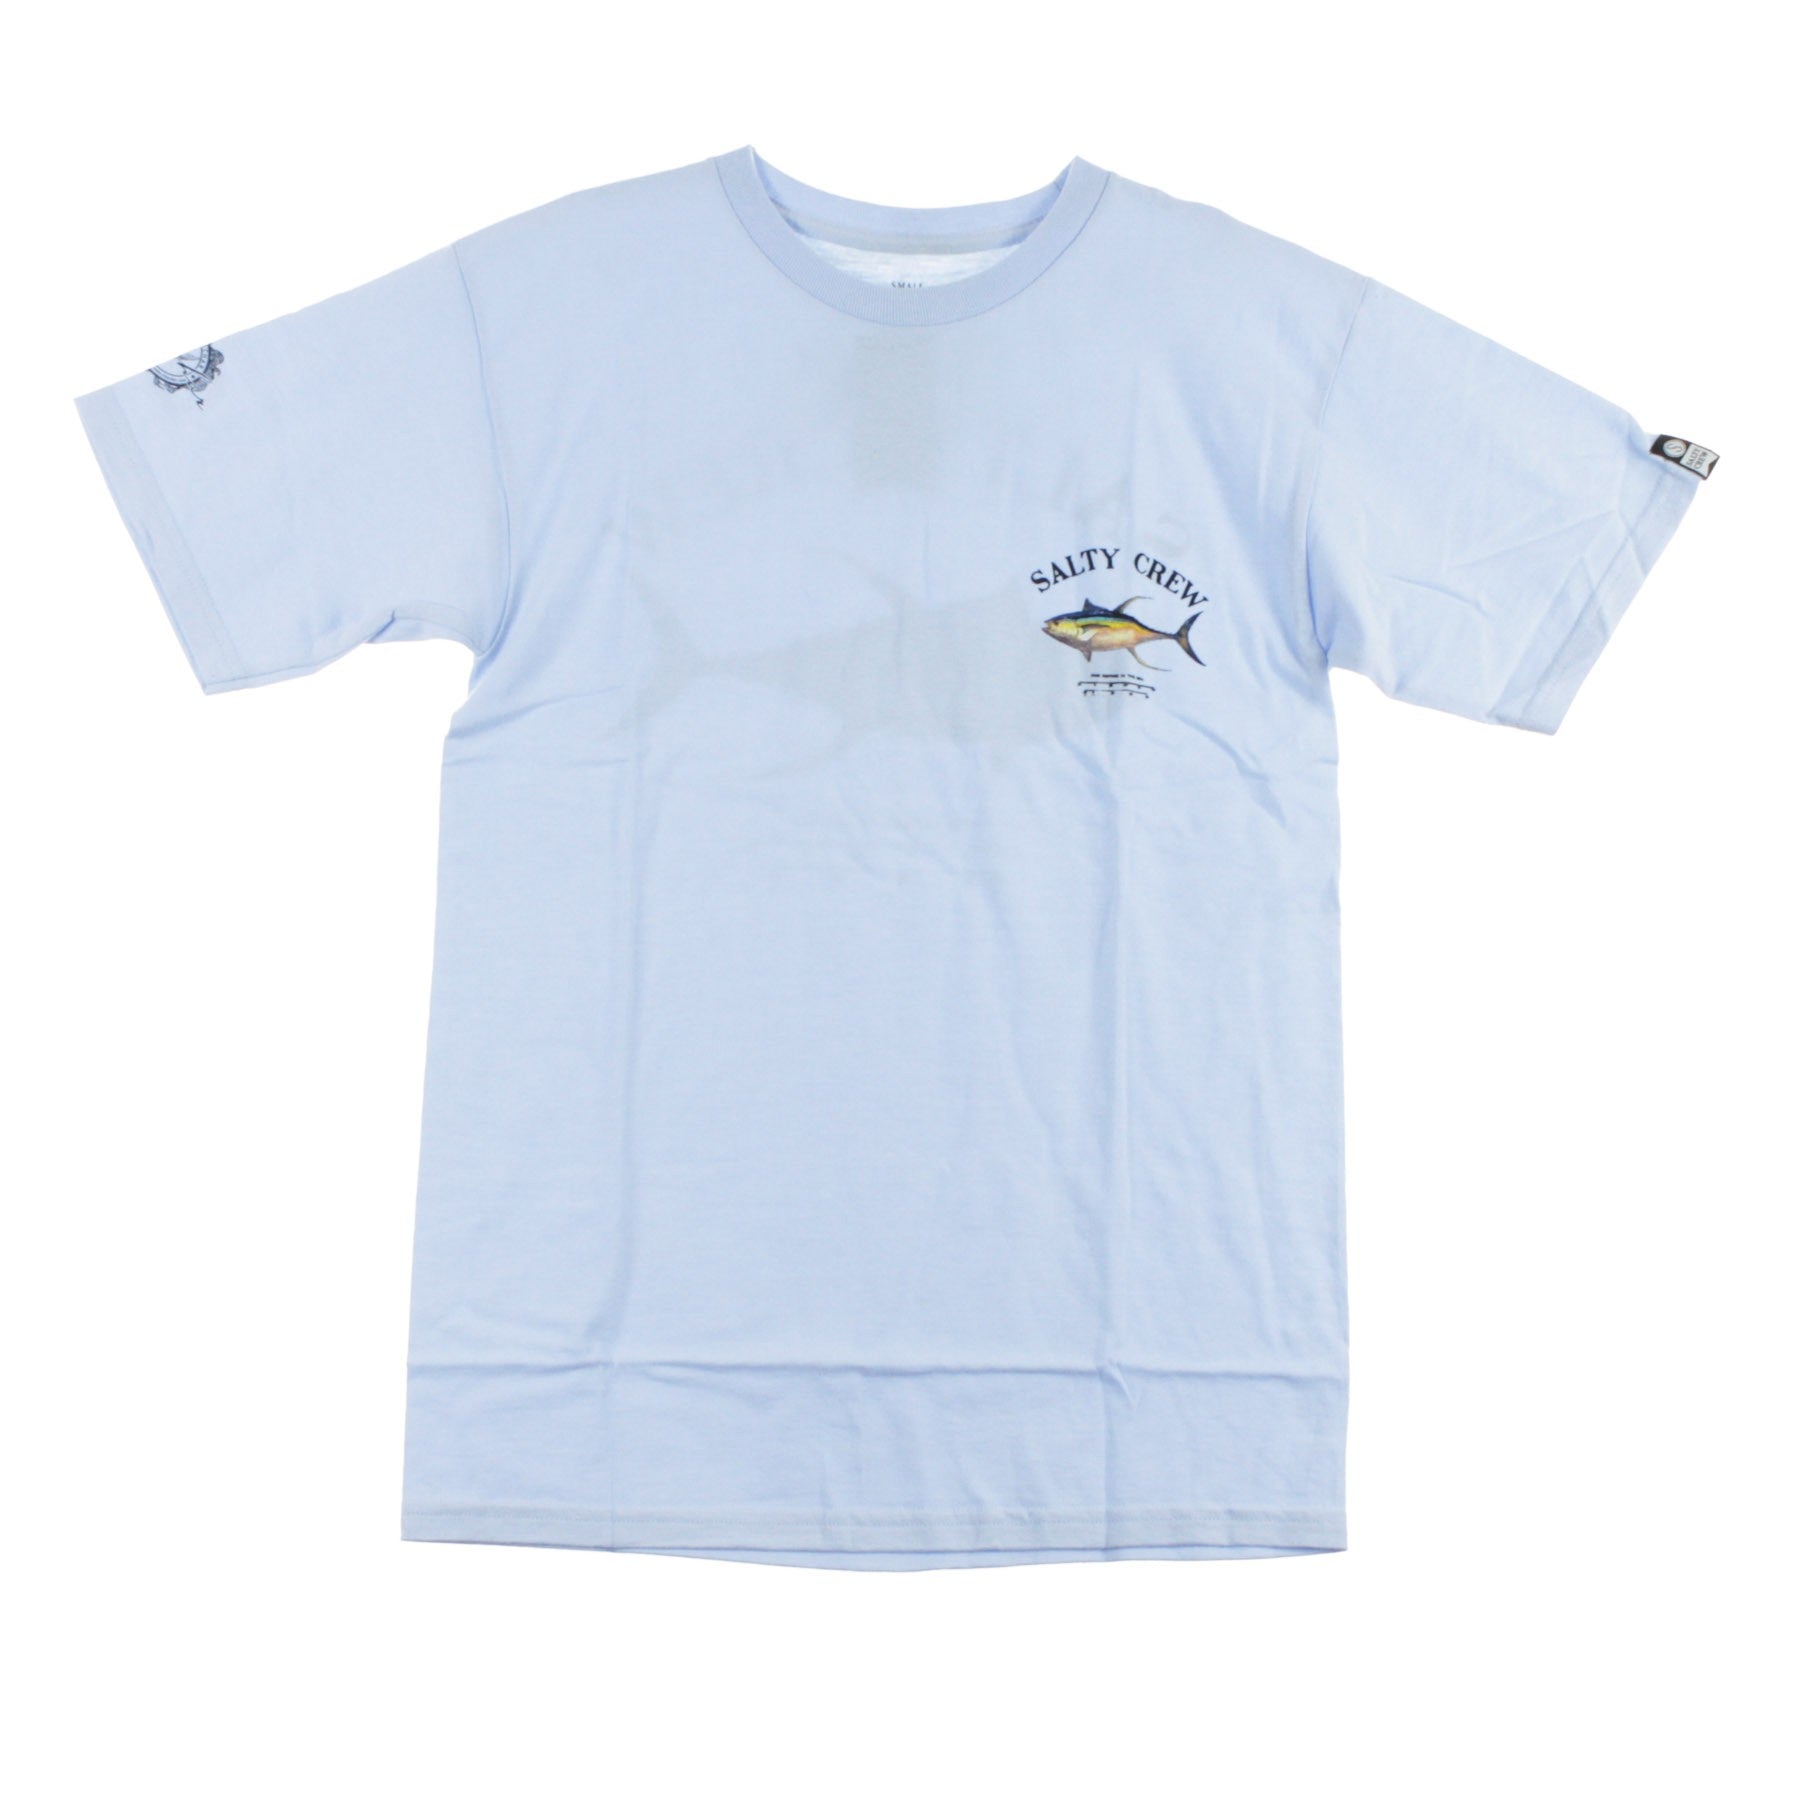 Ahi Mount Tee Light Blue Men's T-Shirt